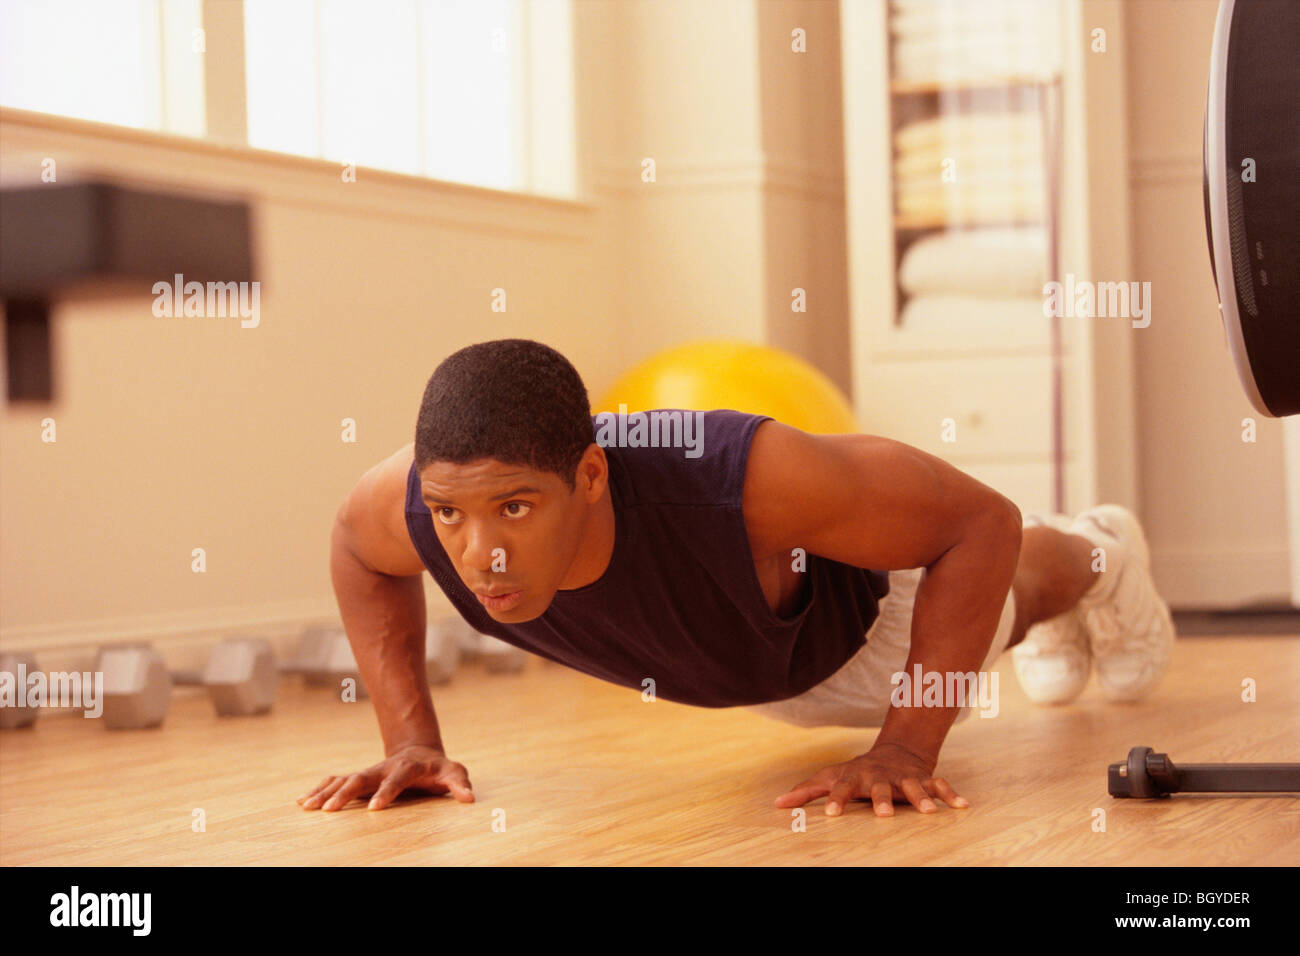 Man doing pushups Stock Photo